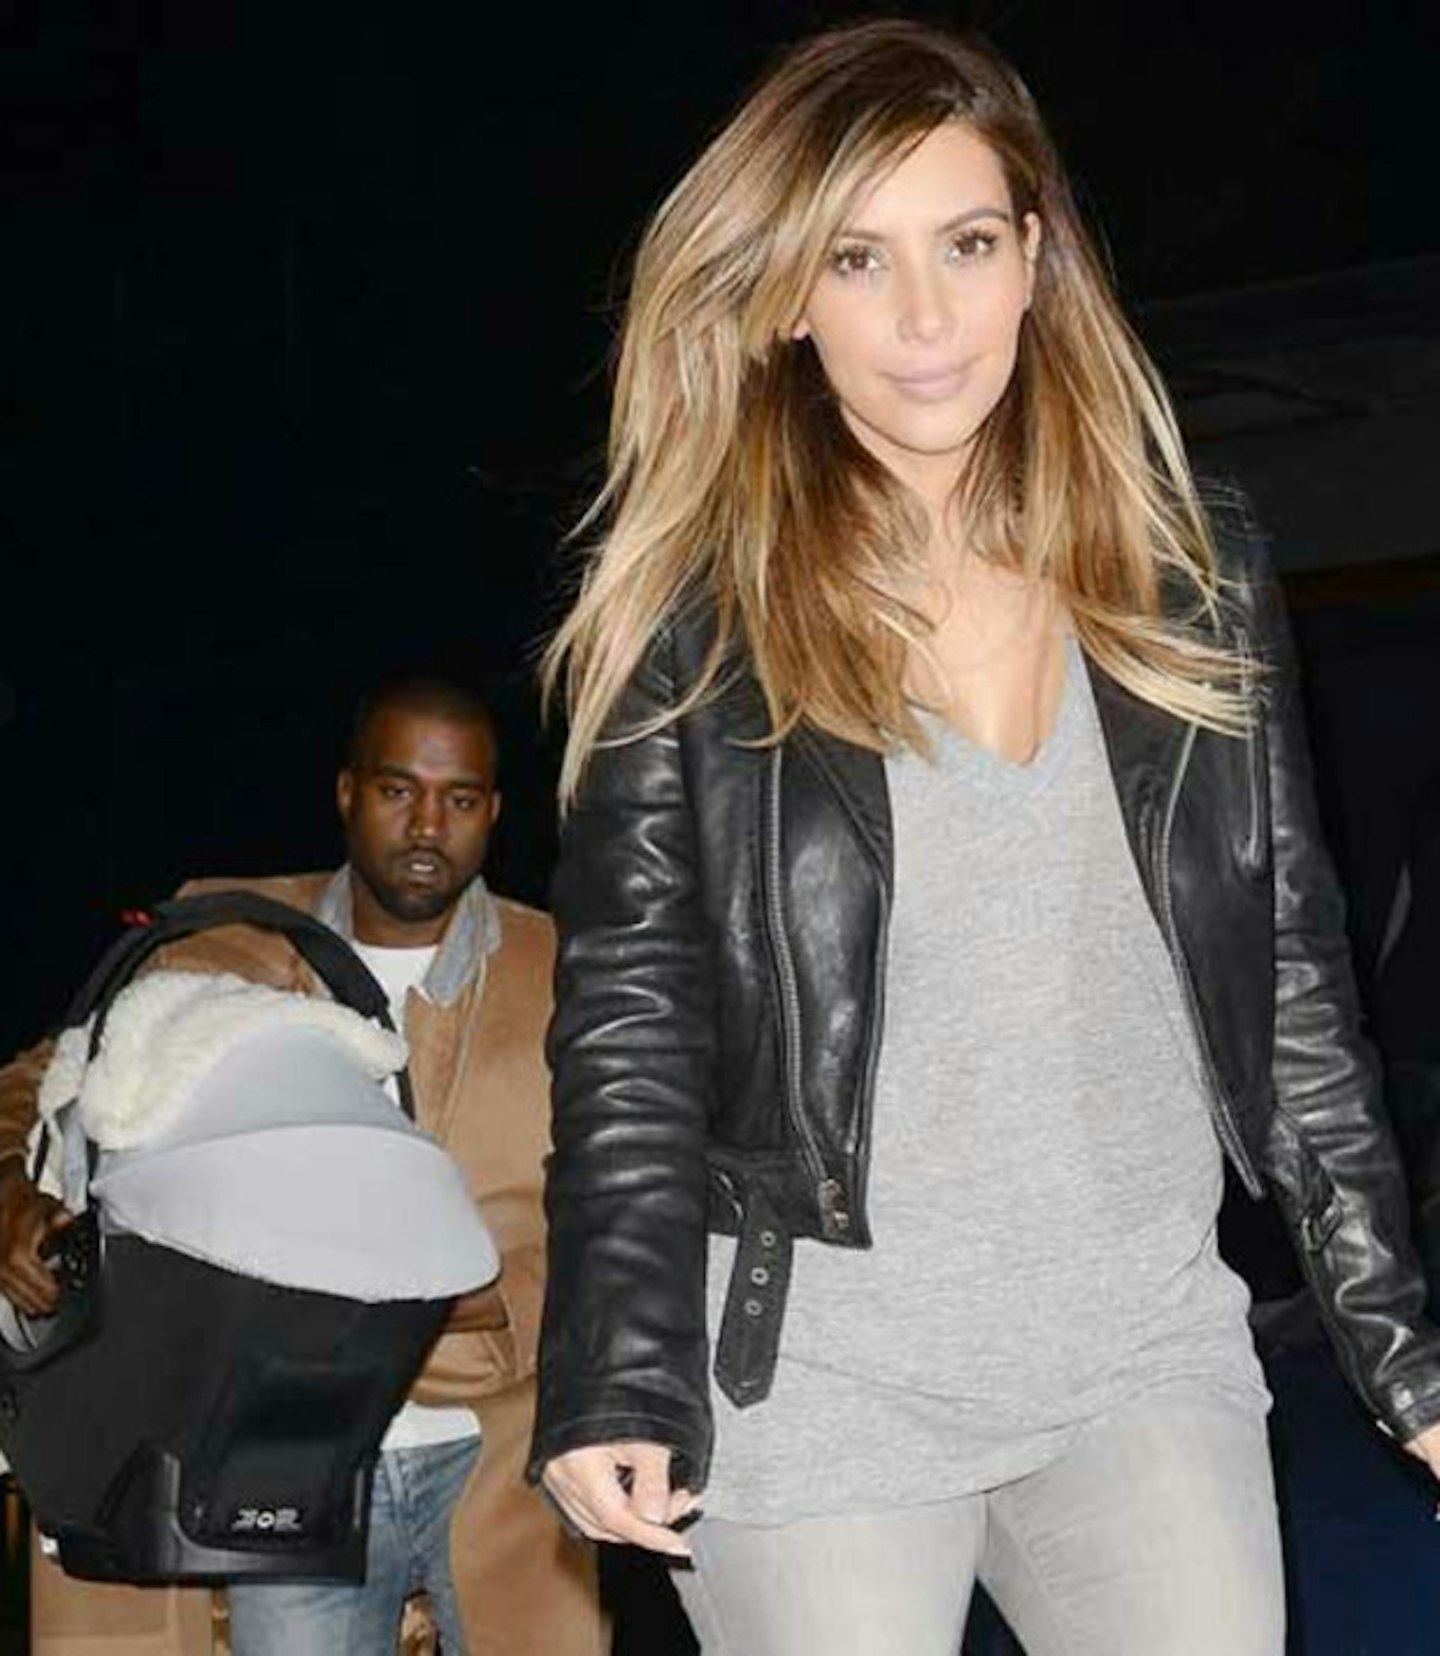 June 2013: Kim Kardashian and Kanye West welcomed daughter North